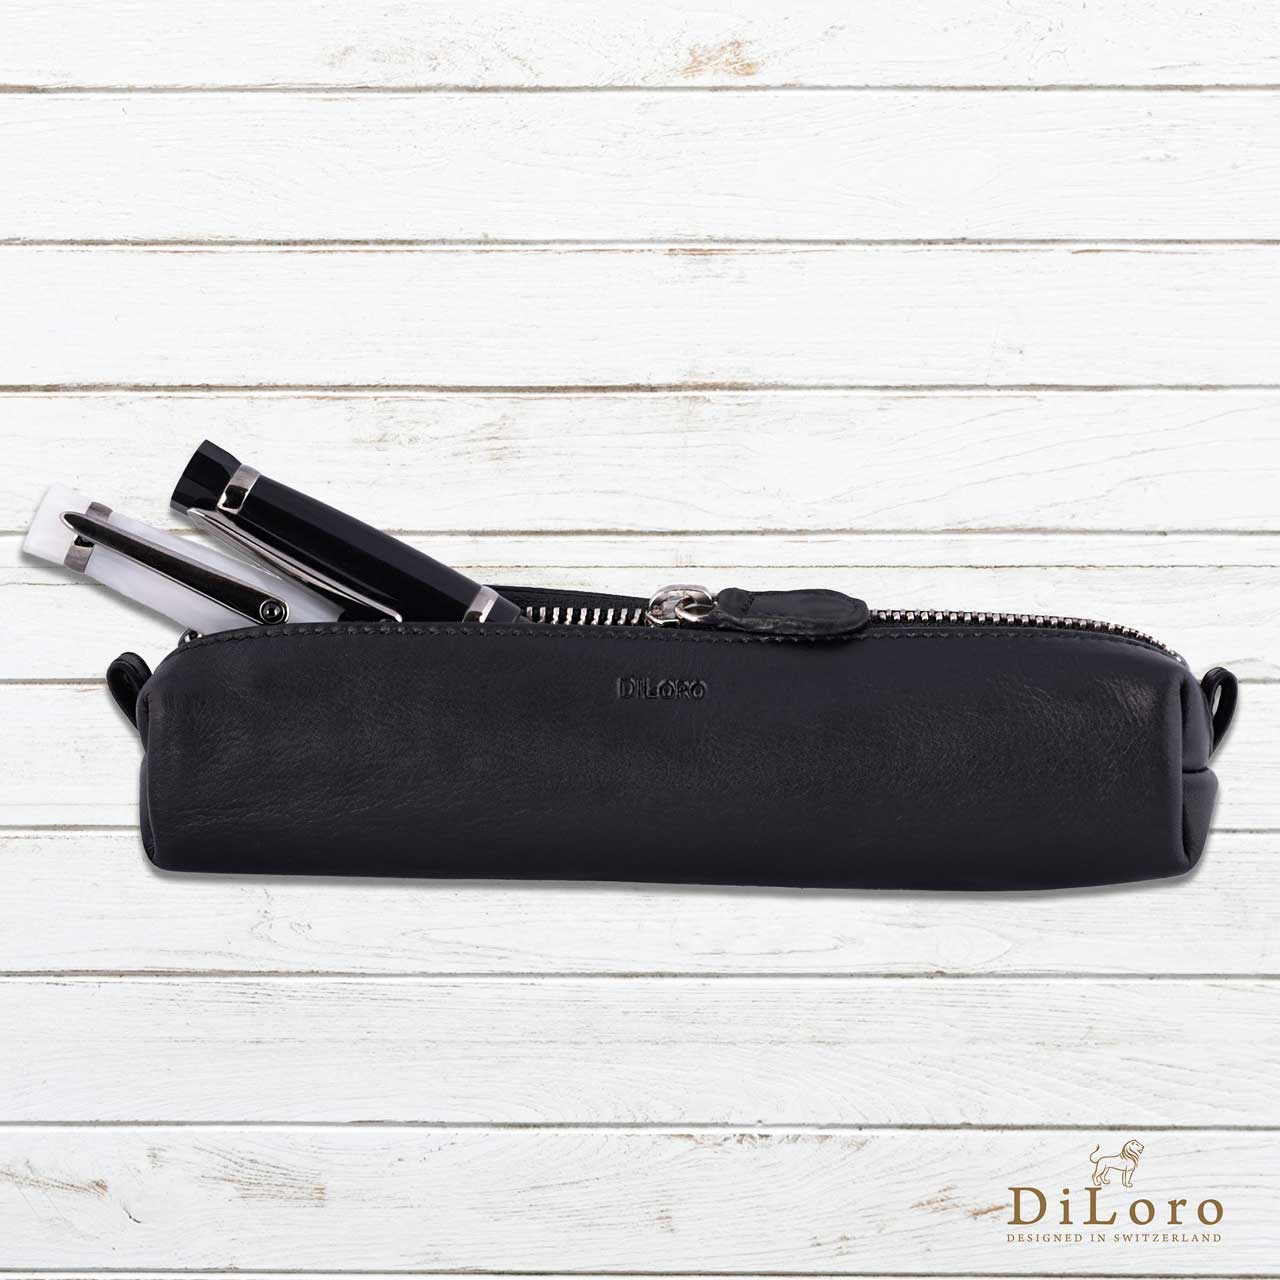 DiLoro Pencil Case, Pencil Pouch, Pen Holder, Cute Pencil Cases Black